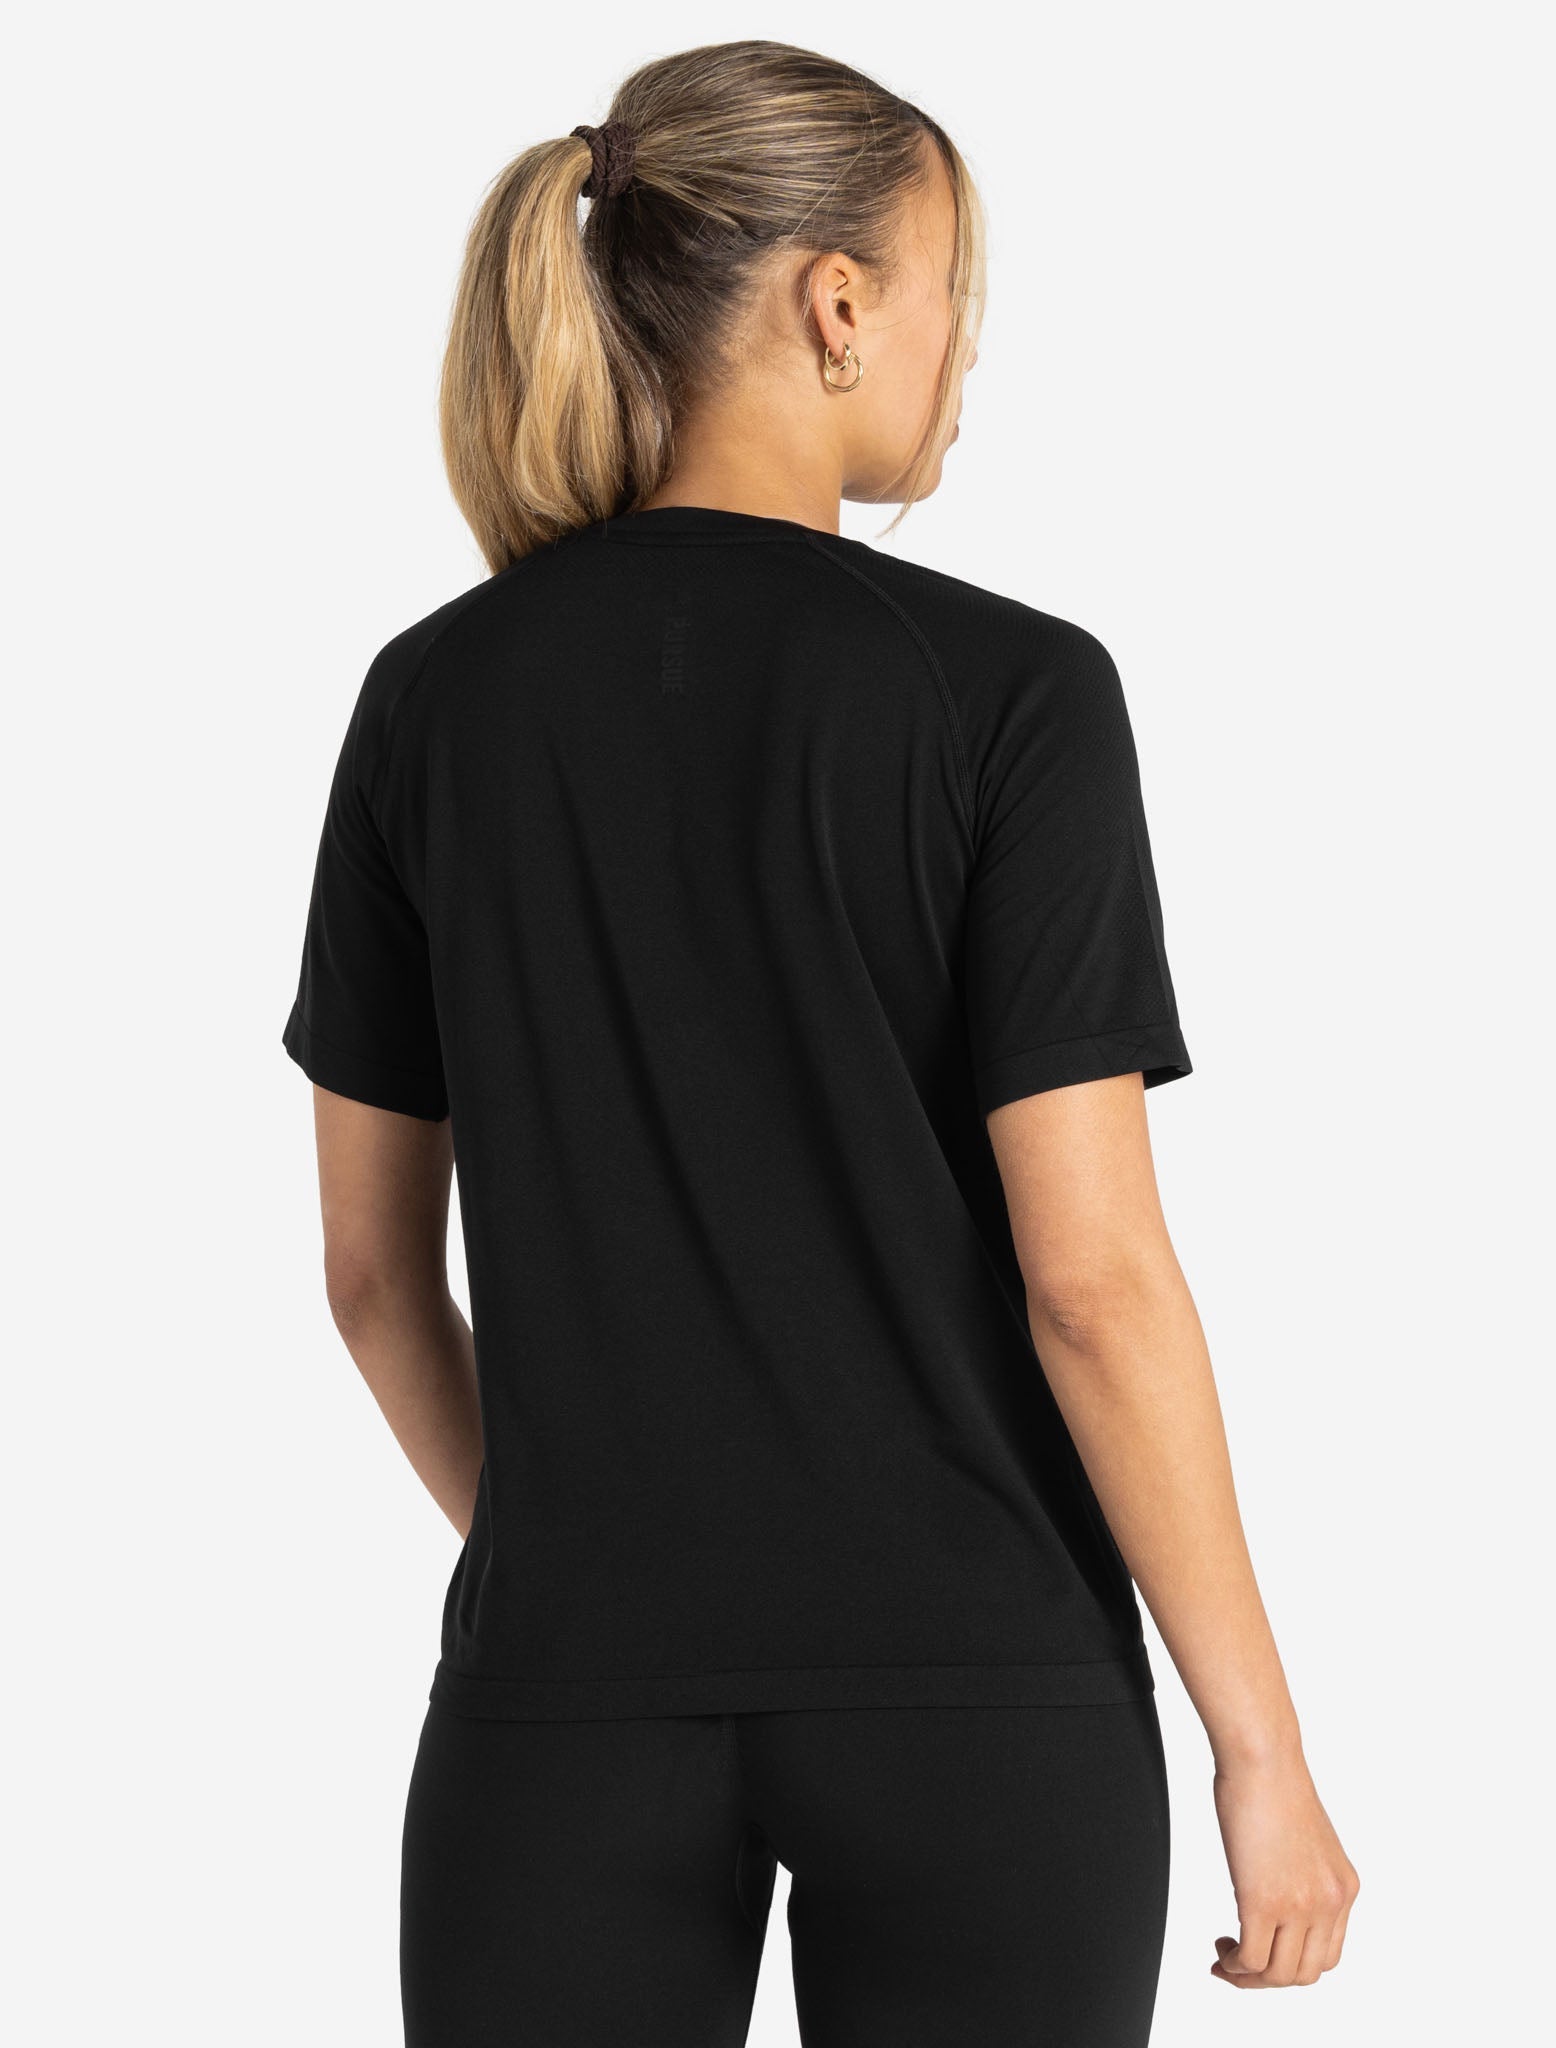 Seamless T-Shirt / Black Pursue Fitness 2